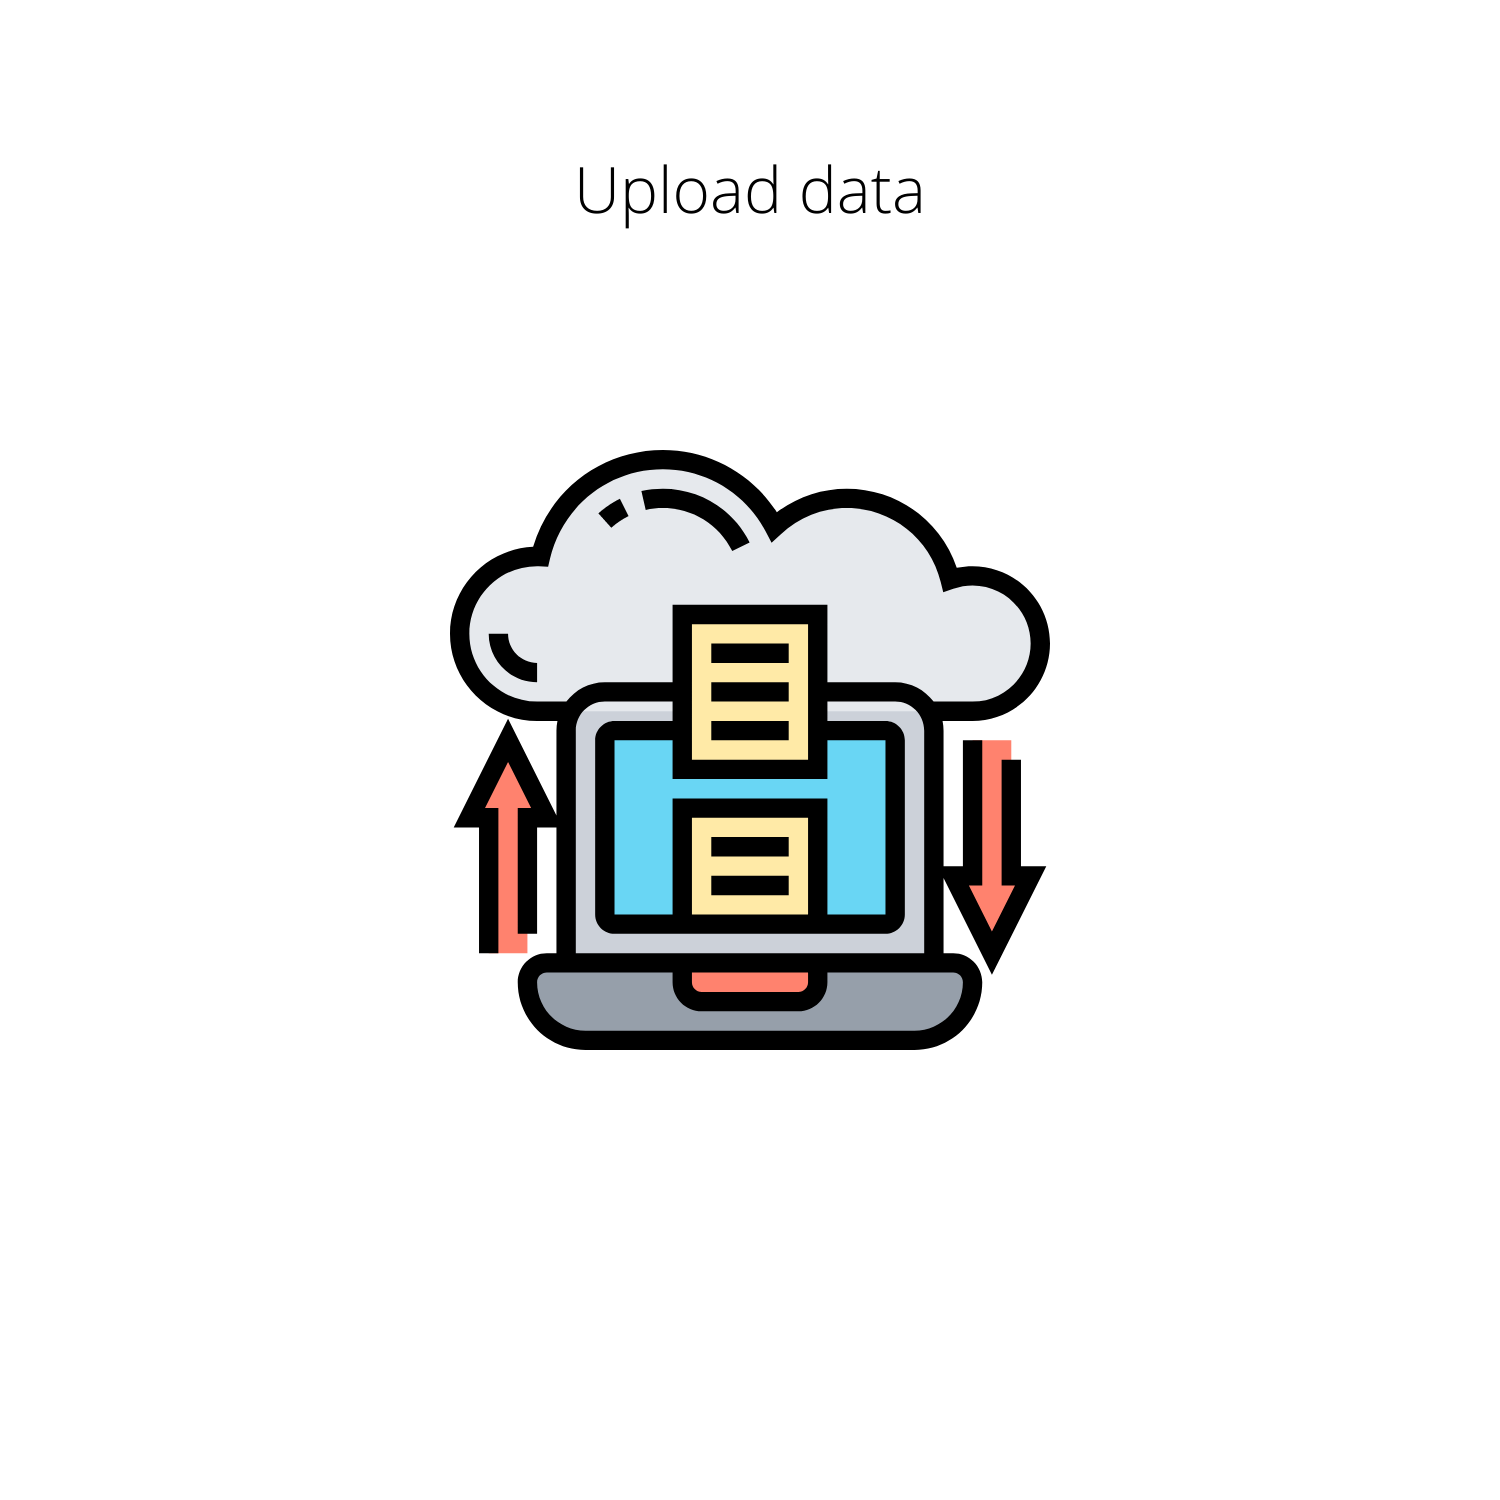 Upload data